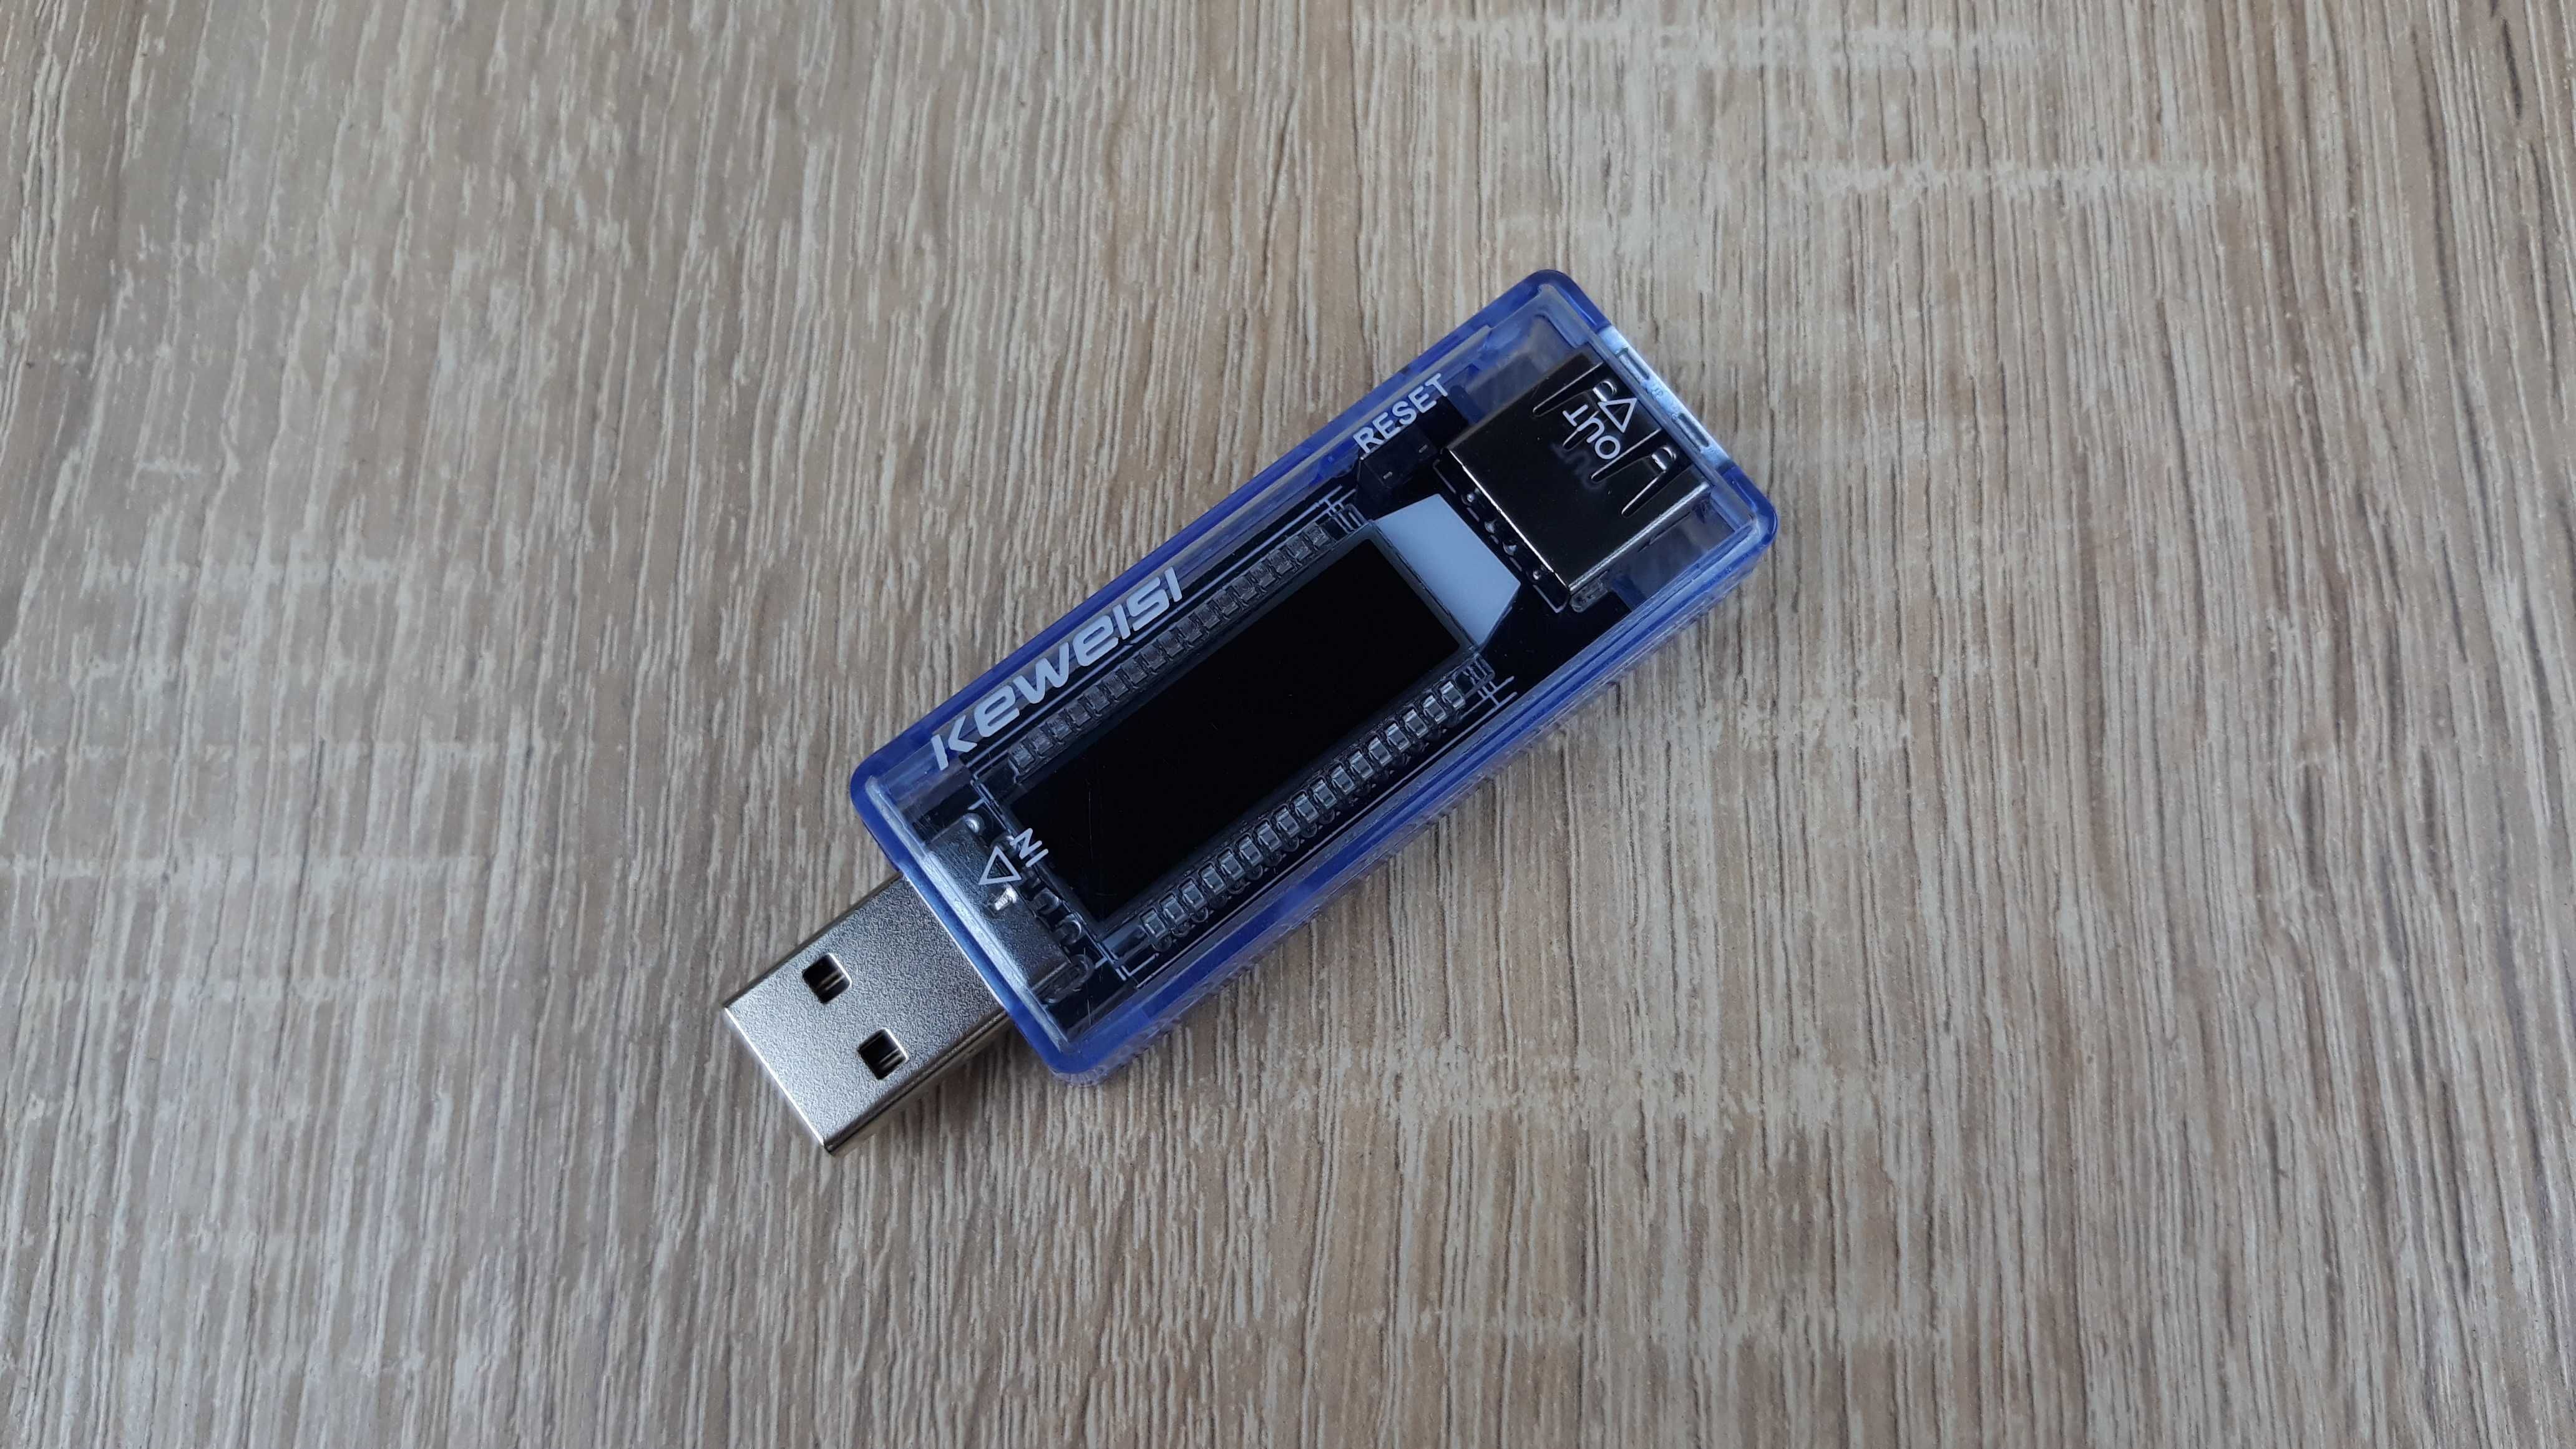 USB Тестер вольтметр амперметр измеритель ёмкости аккумулятора